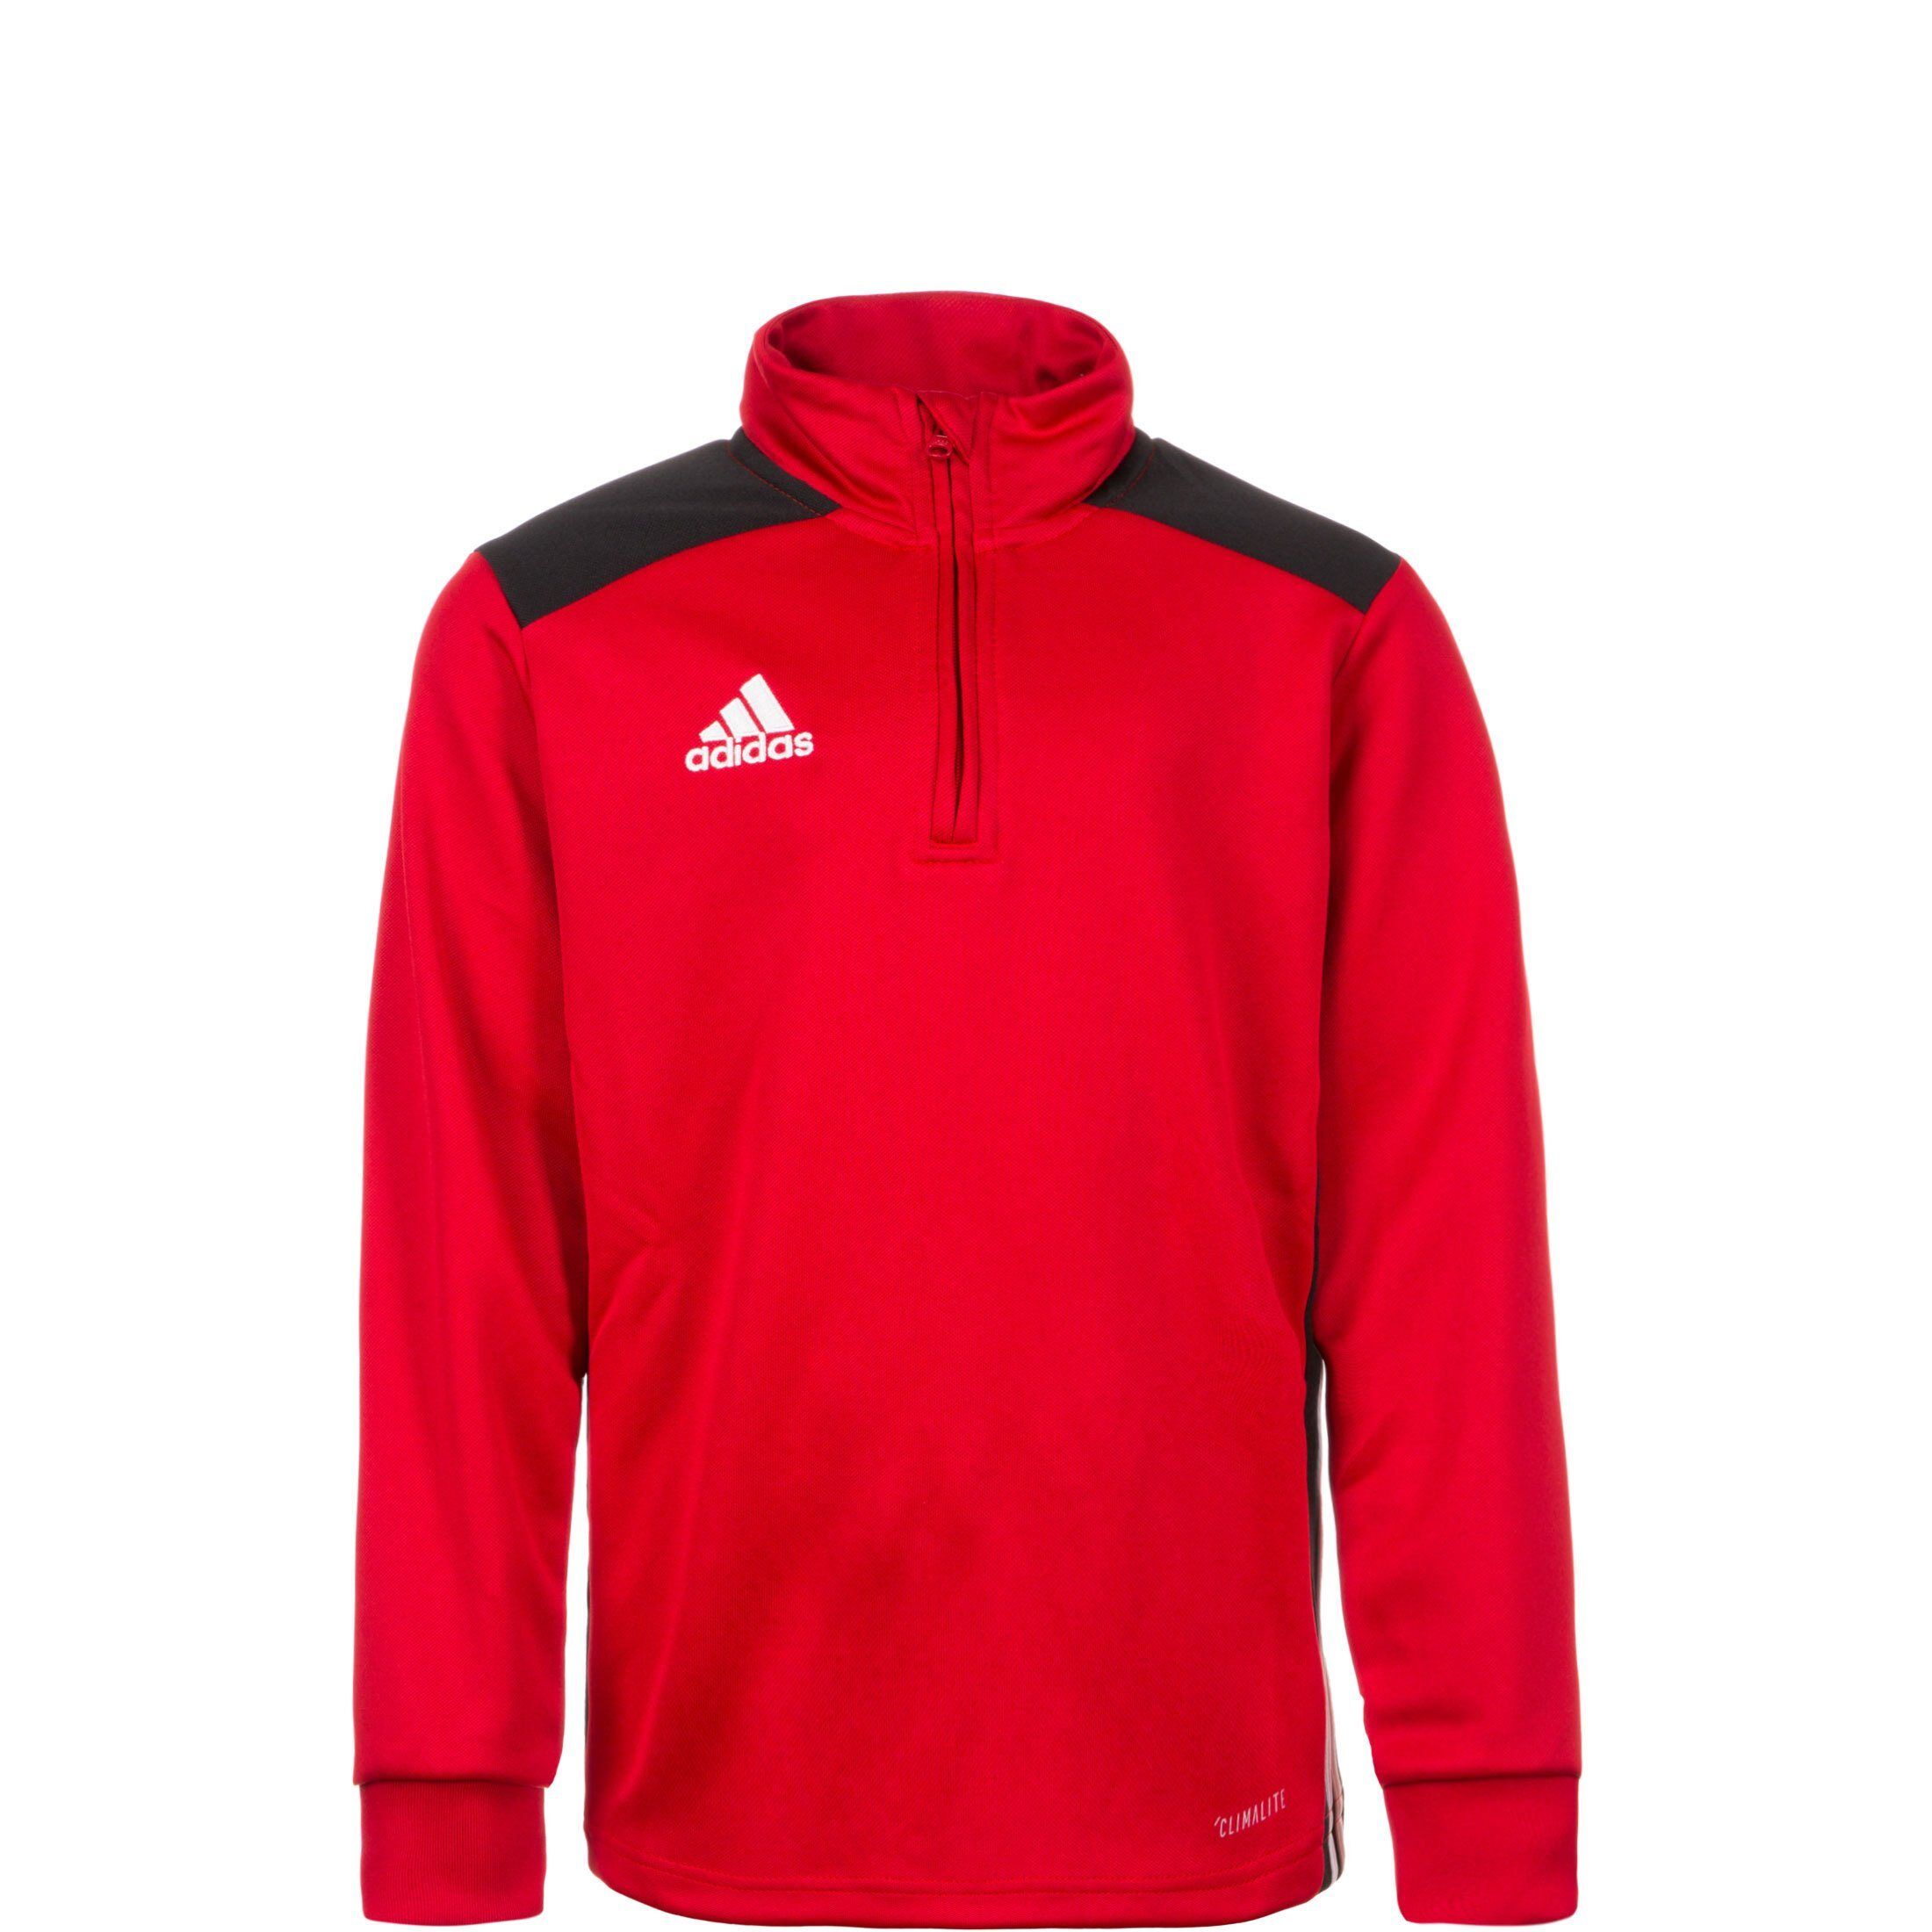 Adidas Performance Trainingsshirt »Regista 18«, rot-schwarz